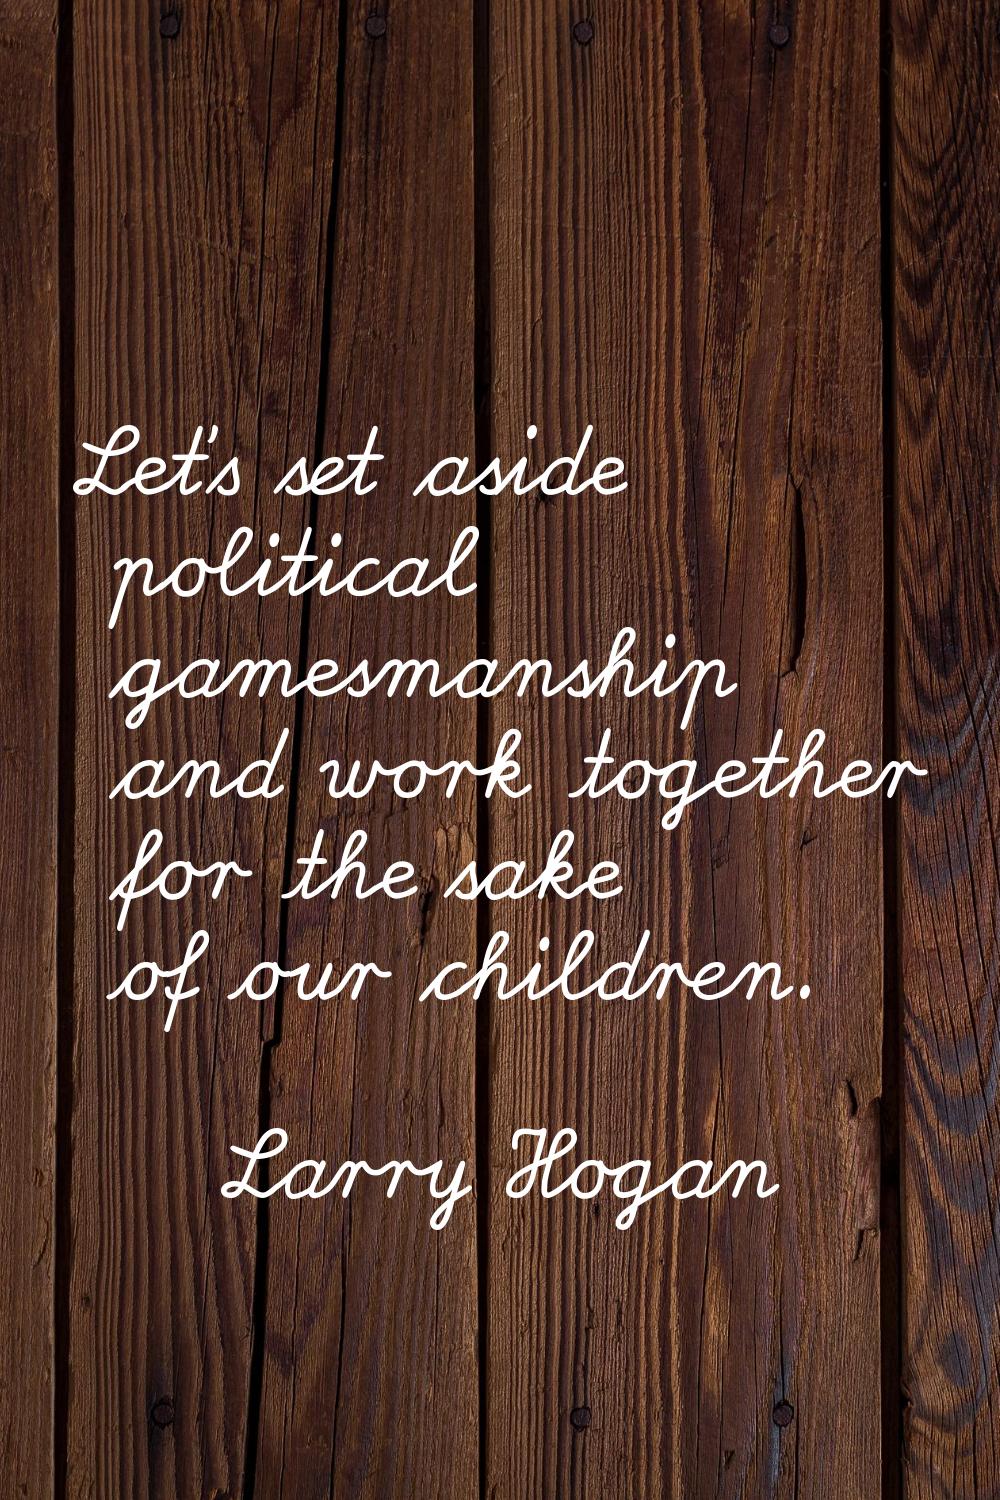 Let's set aside political gamesmanship and work together for the sake of our children.